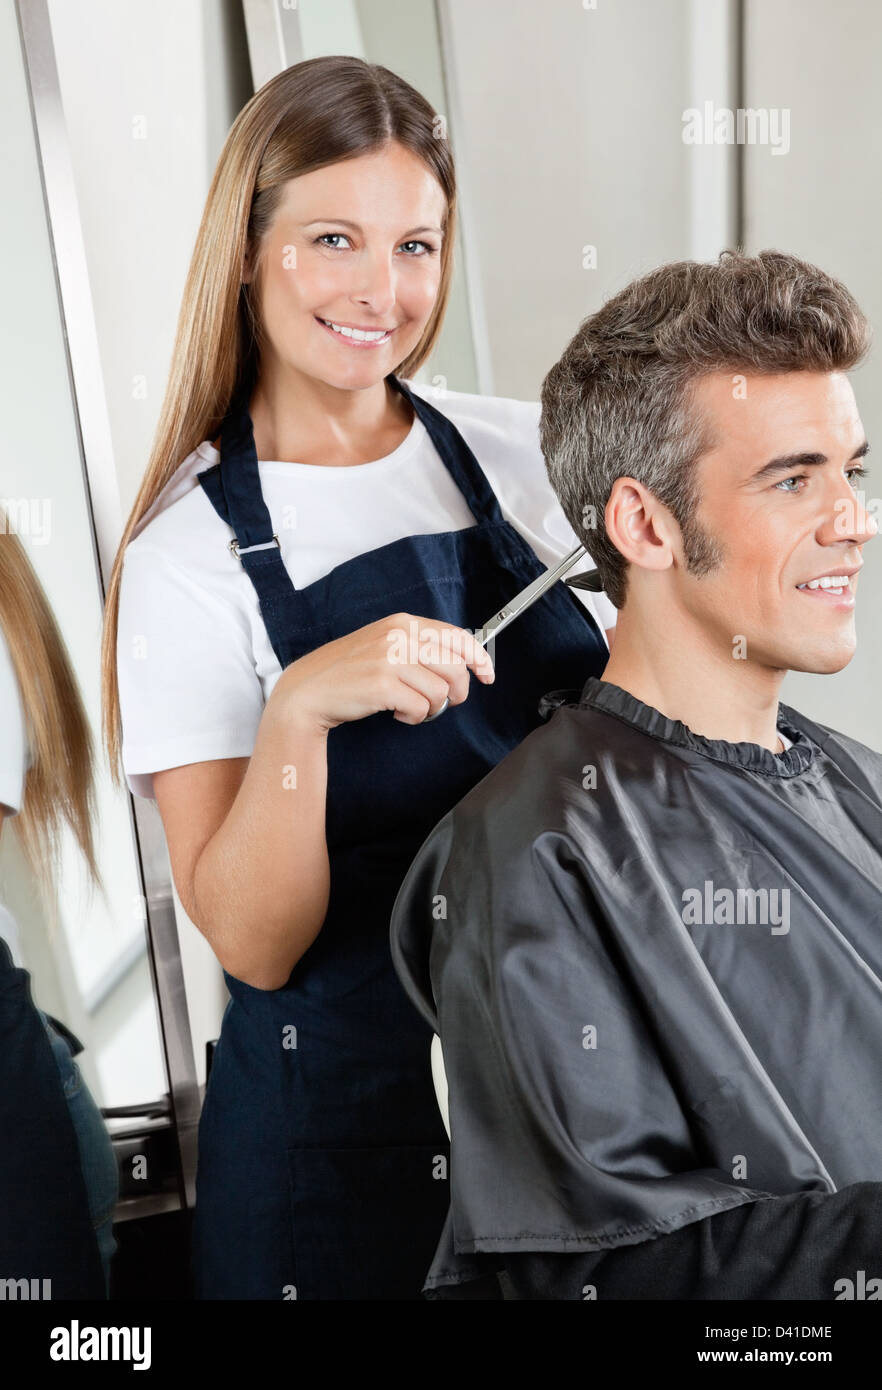 Hairdresser Cutting Client's Hair In Salon Stock Photo